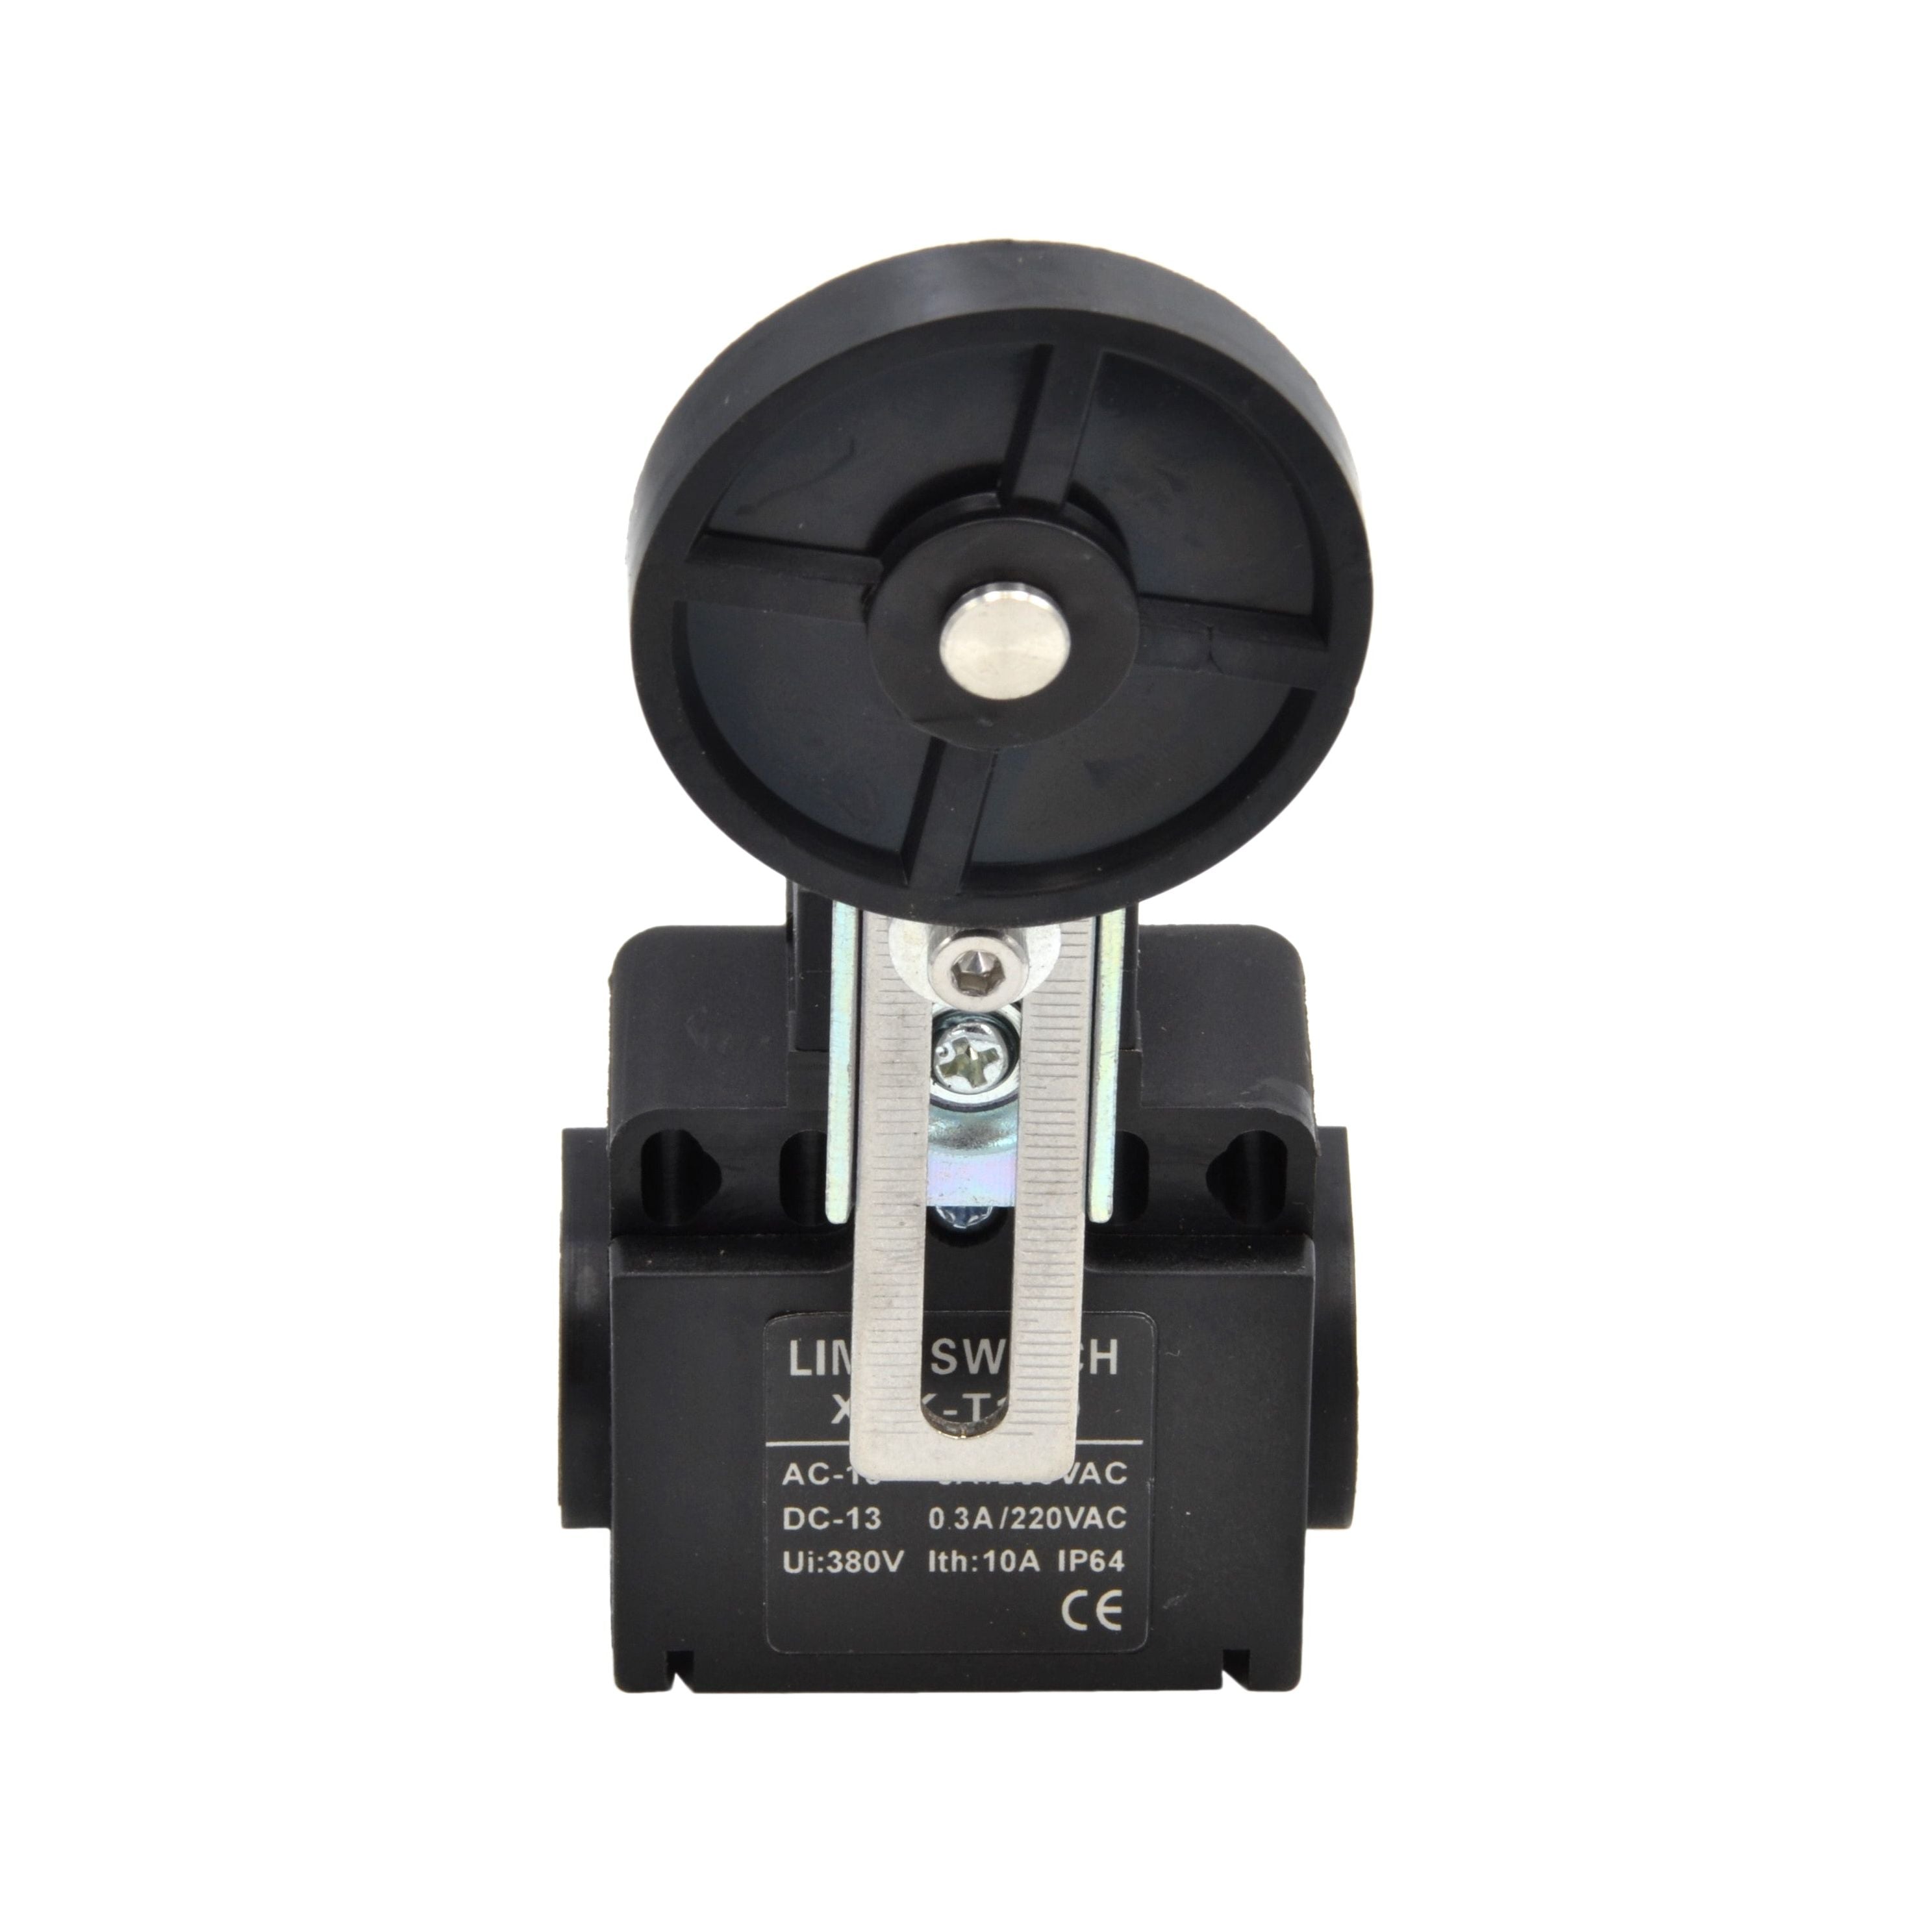 XCK-T149 Elastomer Roller Lever 50 mm Limit Switch